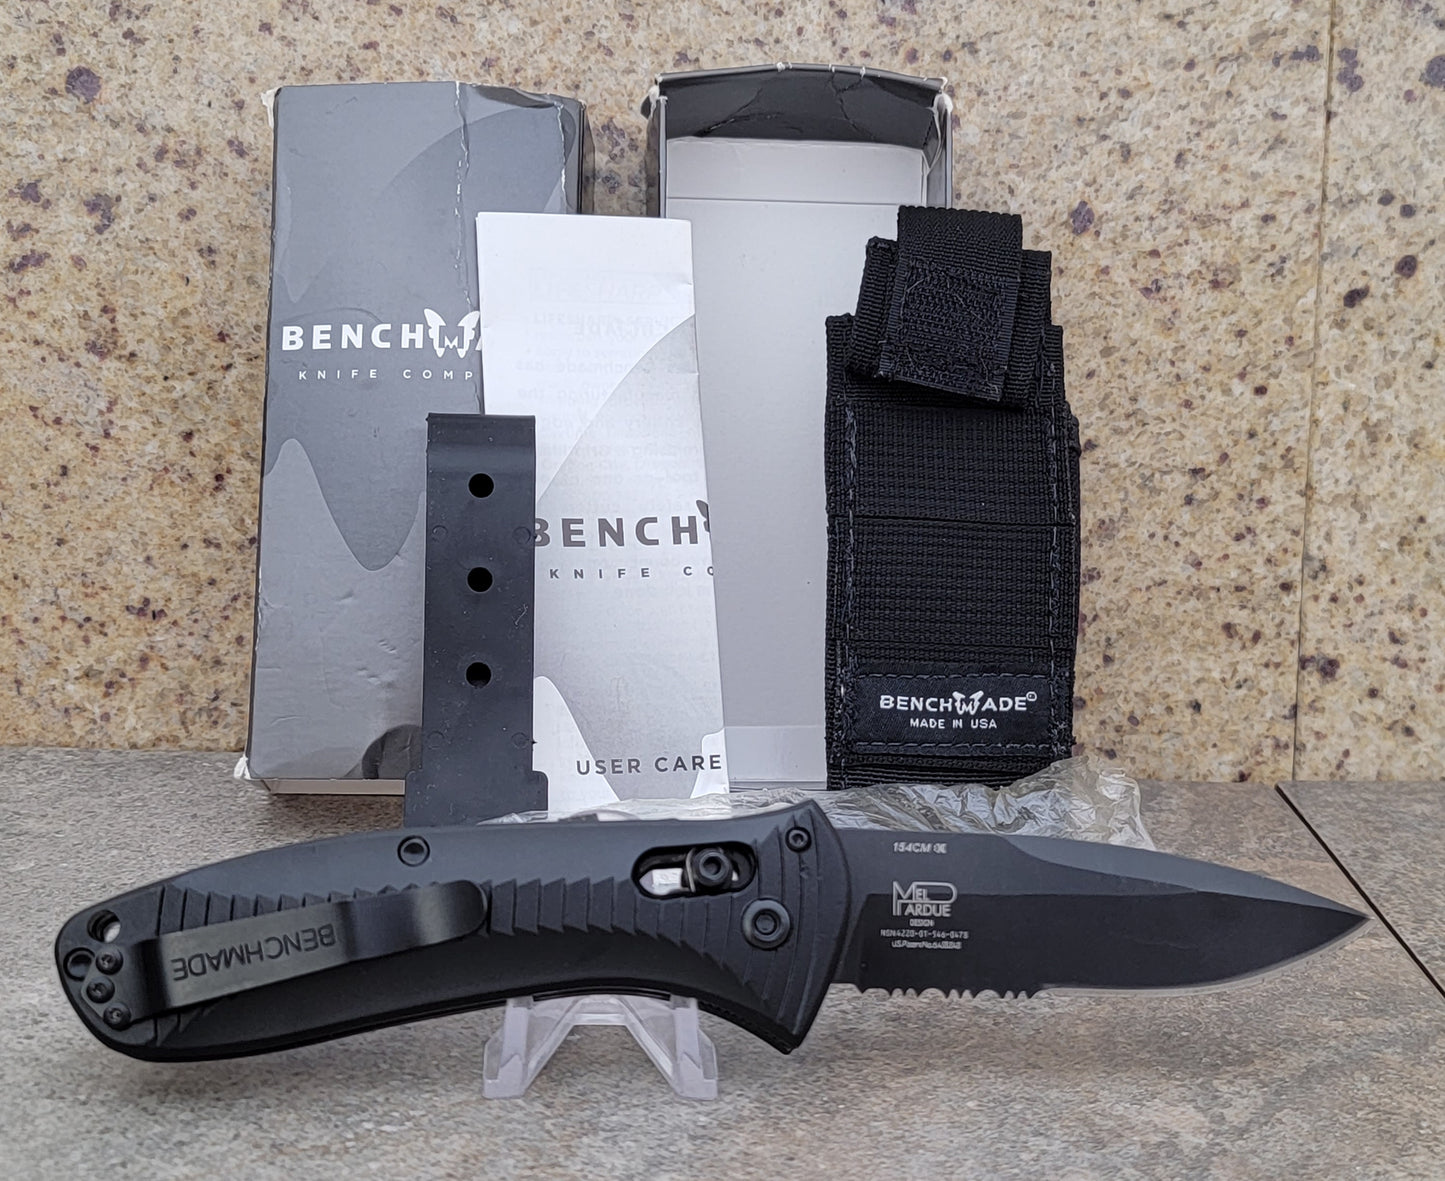 Benchmade 5000SBK Presidio Automatic Knife, 154CM Black Combo Blade - DISCONTINUED - NEW